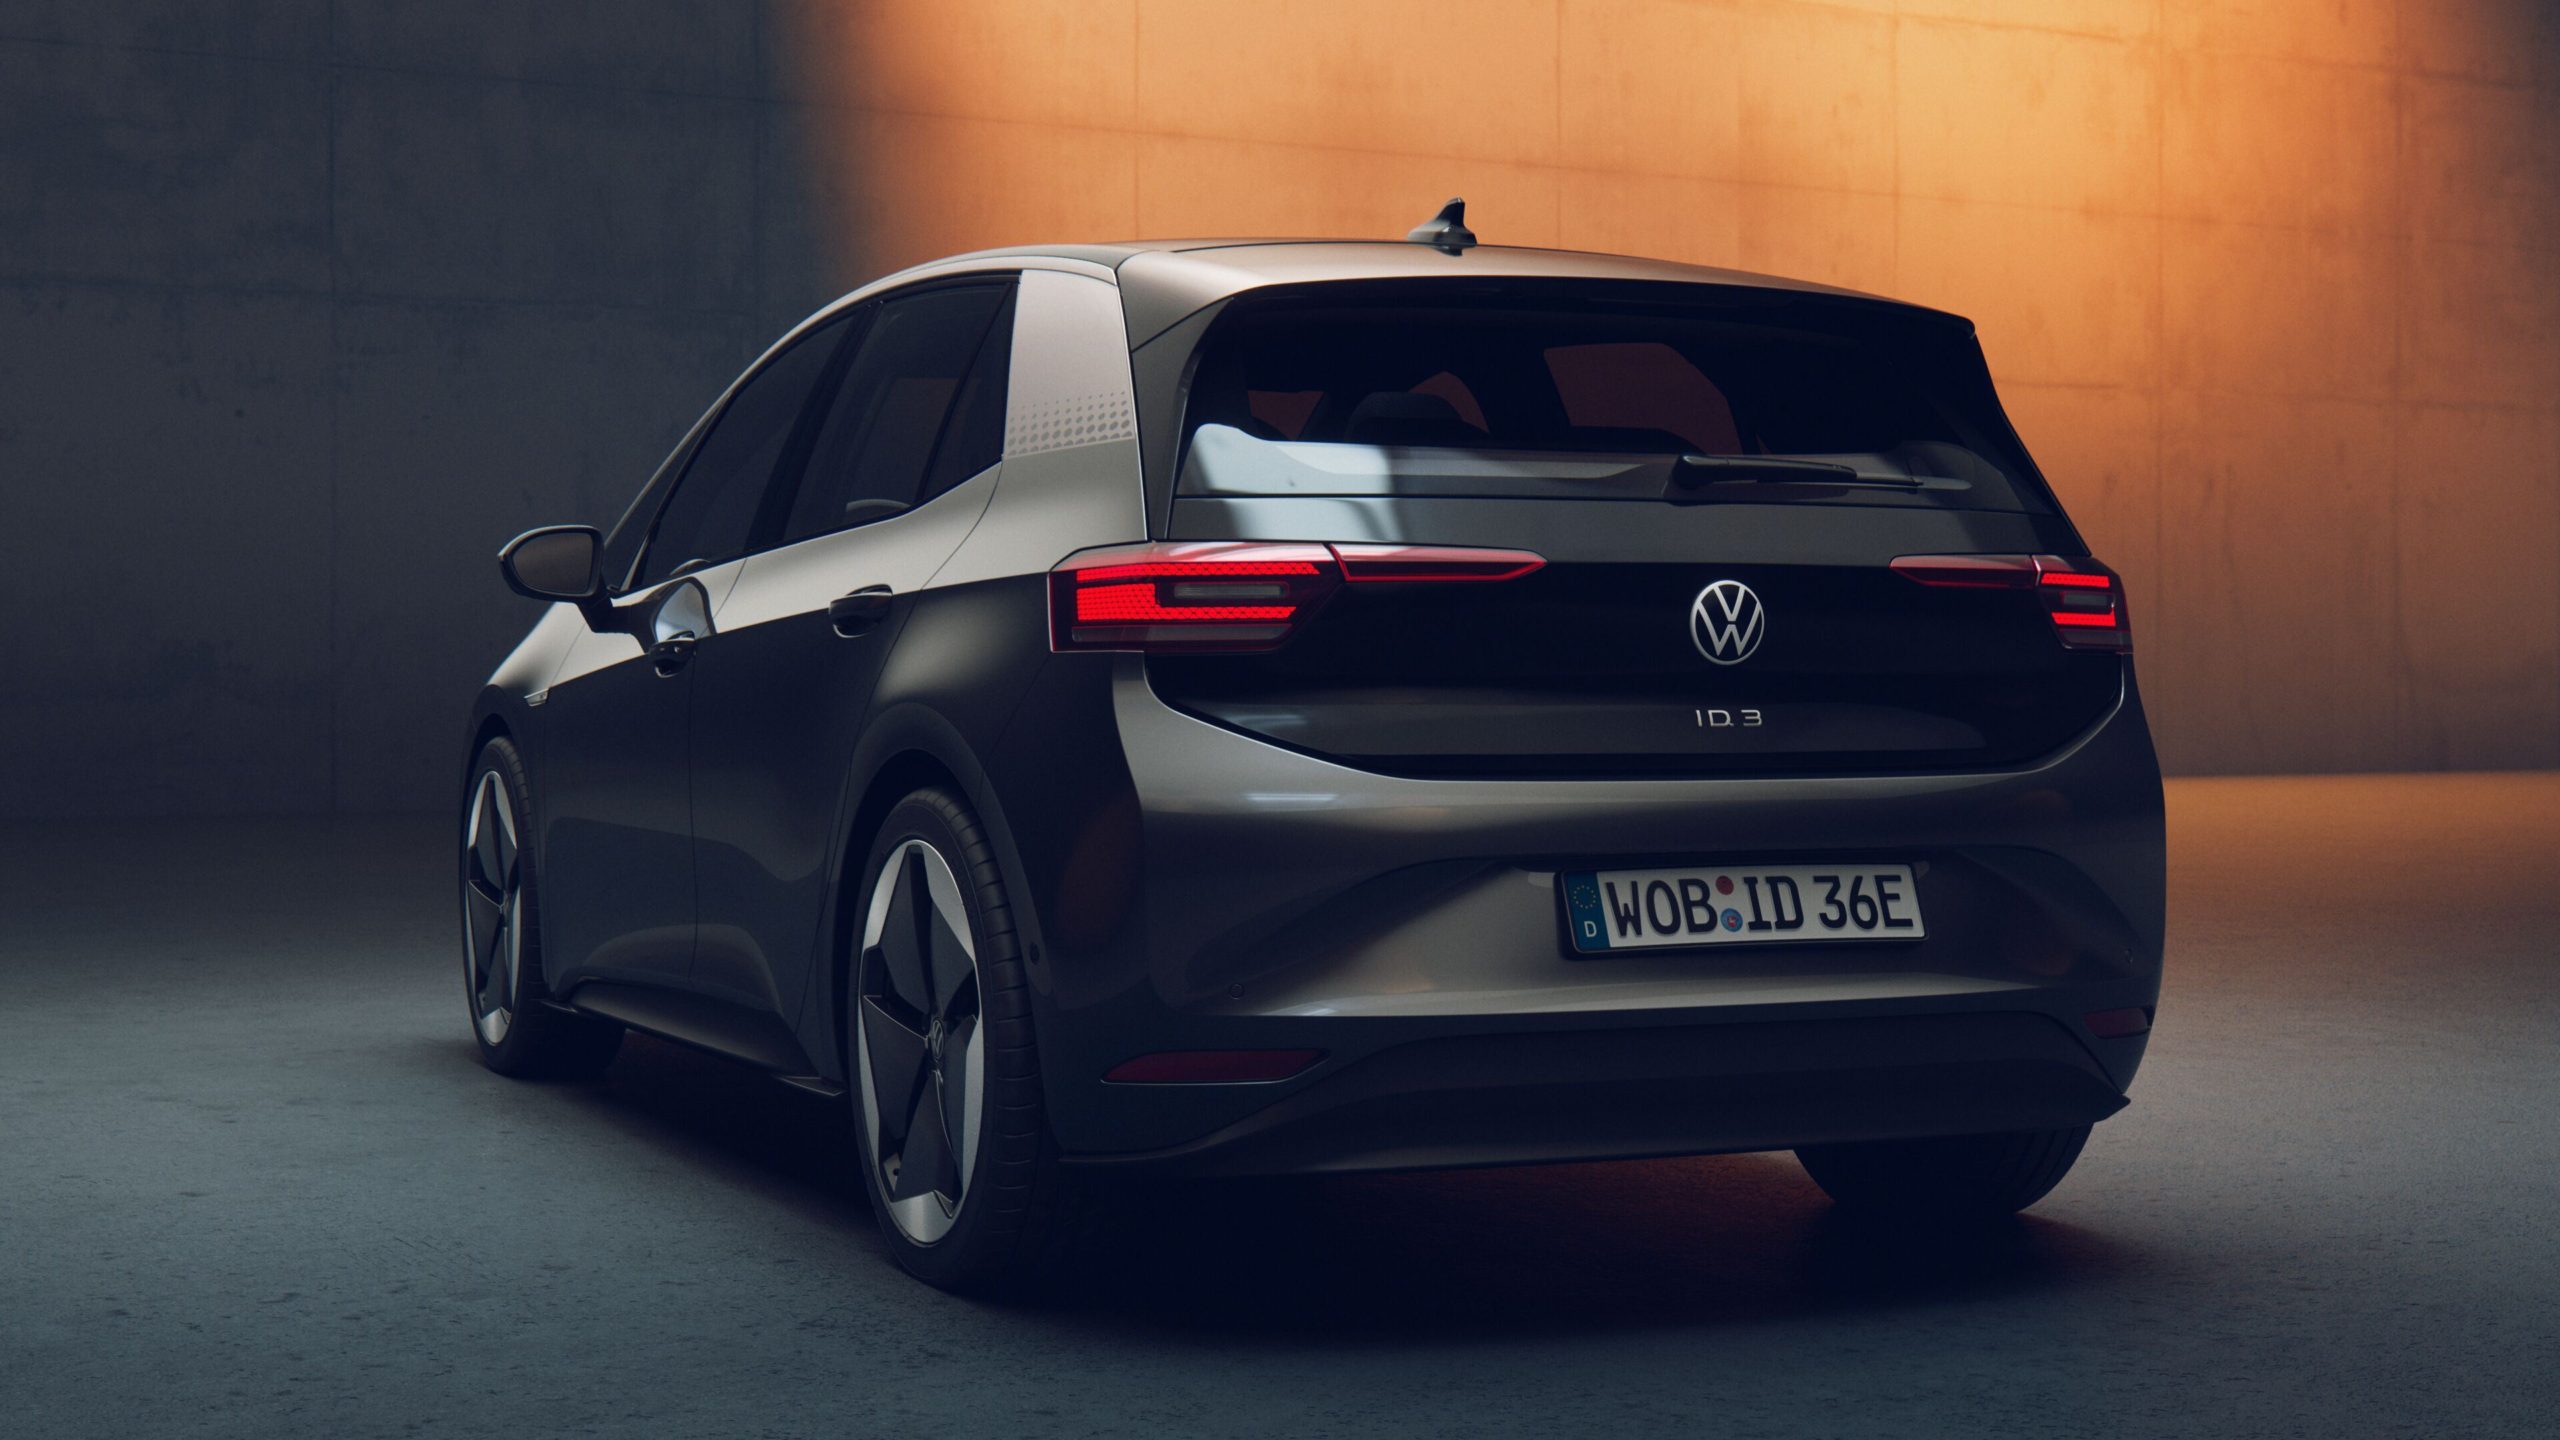 Hatótávrekord a Volkswagen ID.3-mal: